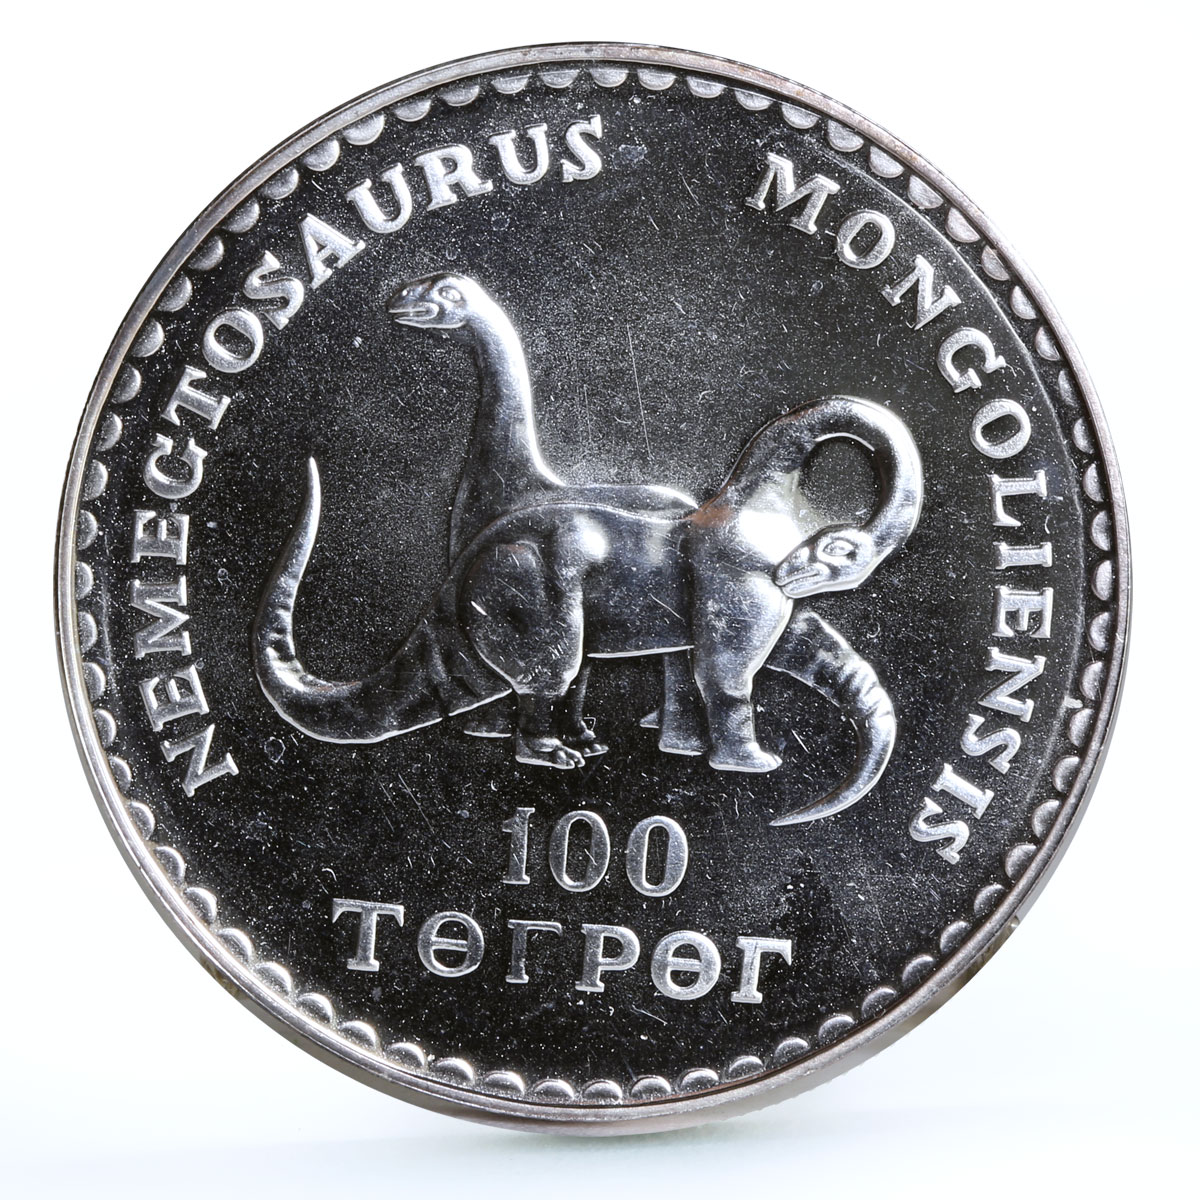 Mongolia 100 togrog Prehistoric Animals Dinosaurs Nemegtosaurus silver coin 1989